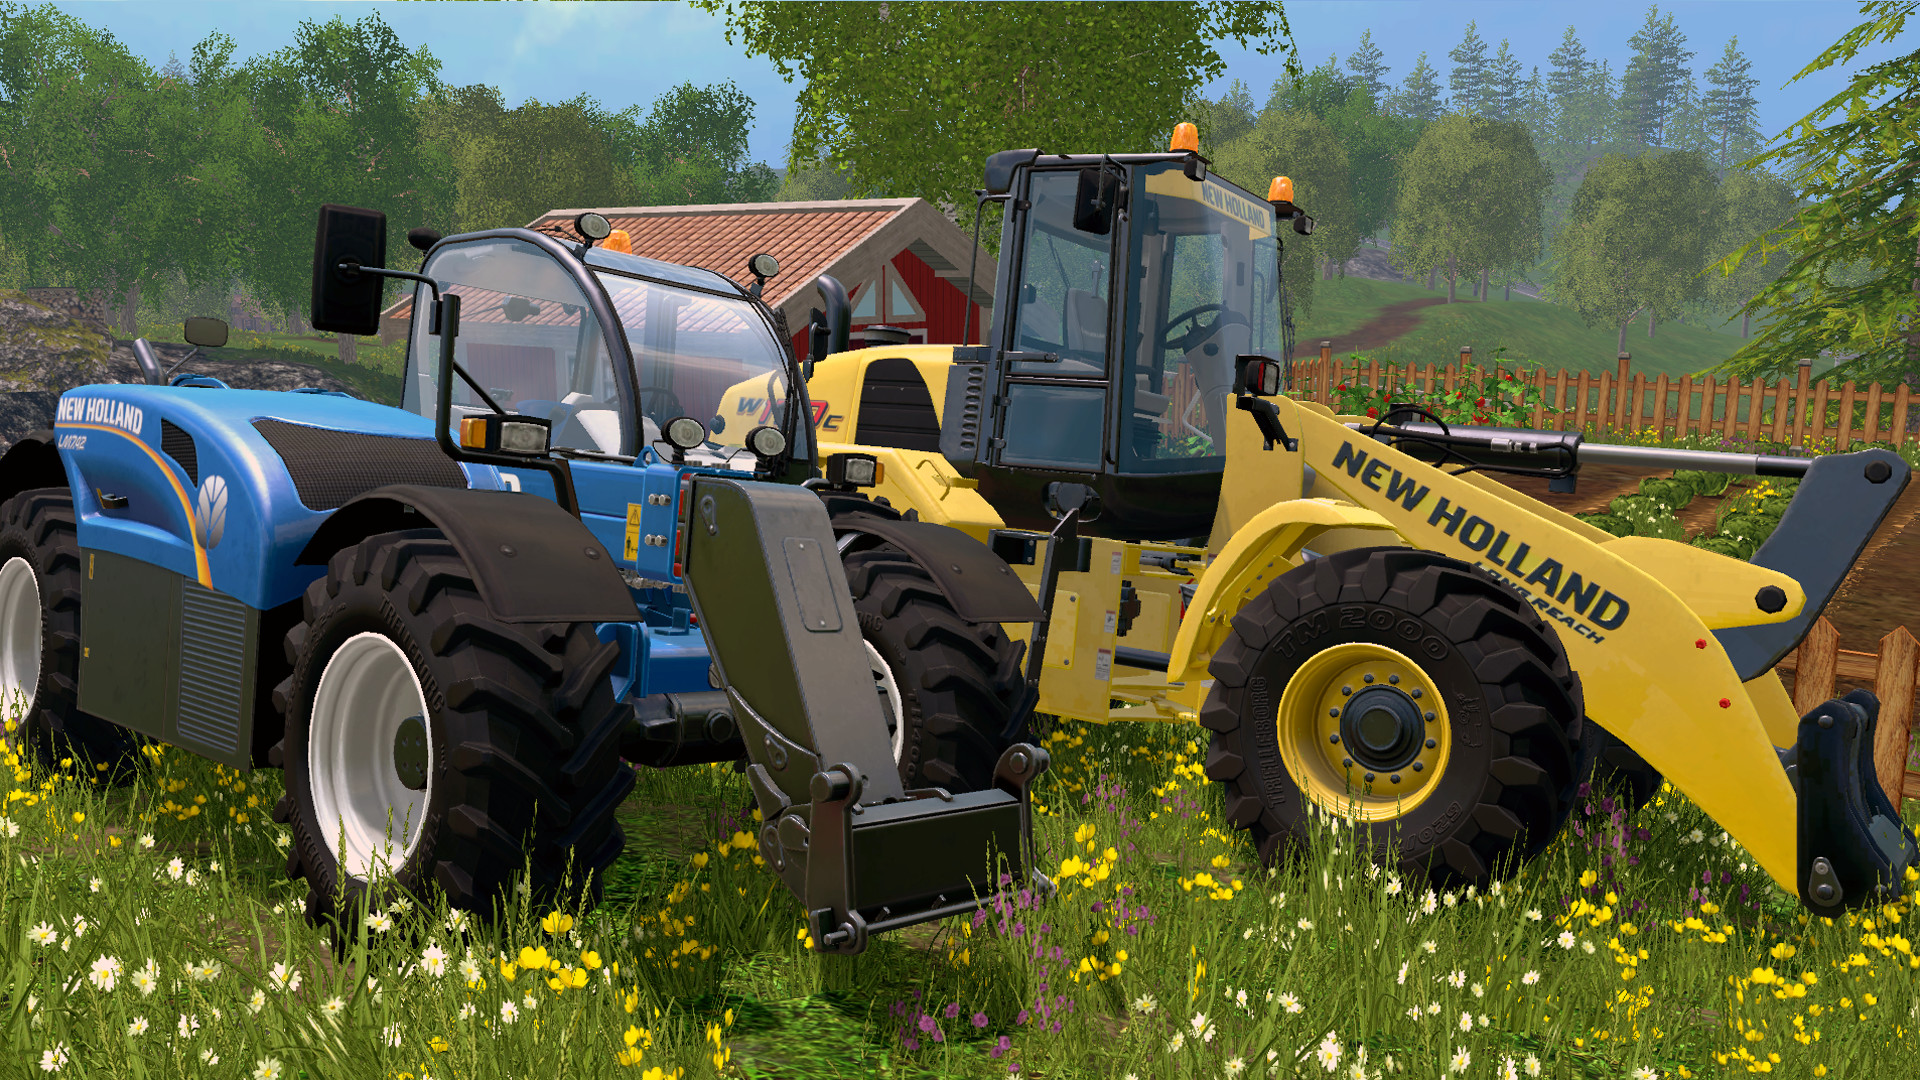 Farming Simulator 15 - New Holland Loader Pack Featured Screenshot #1